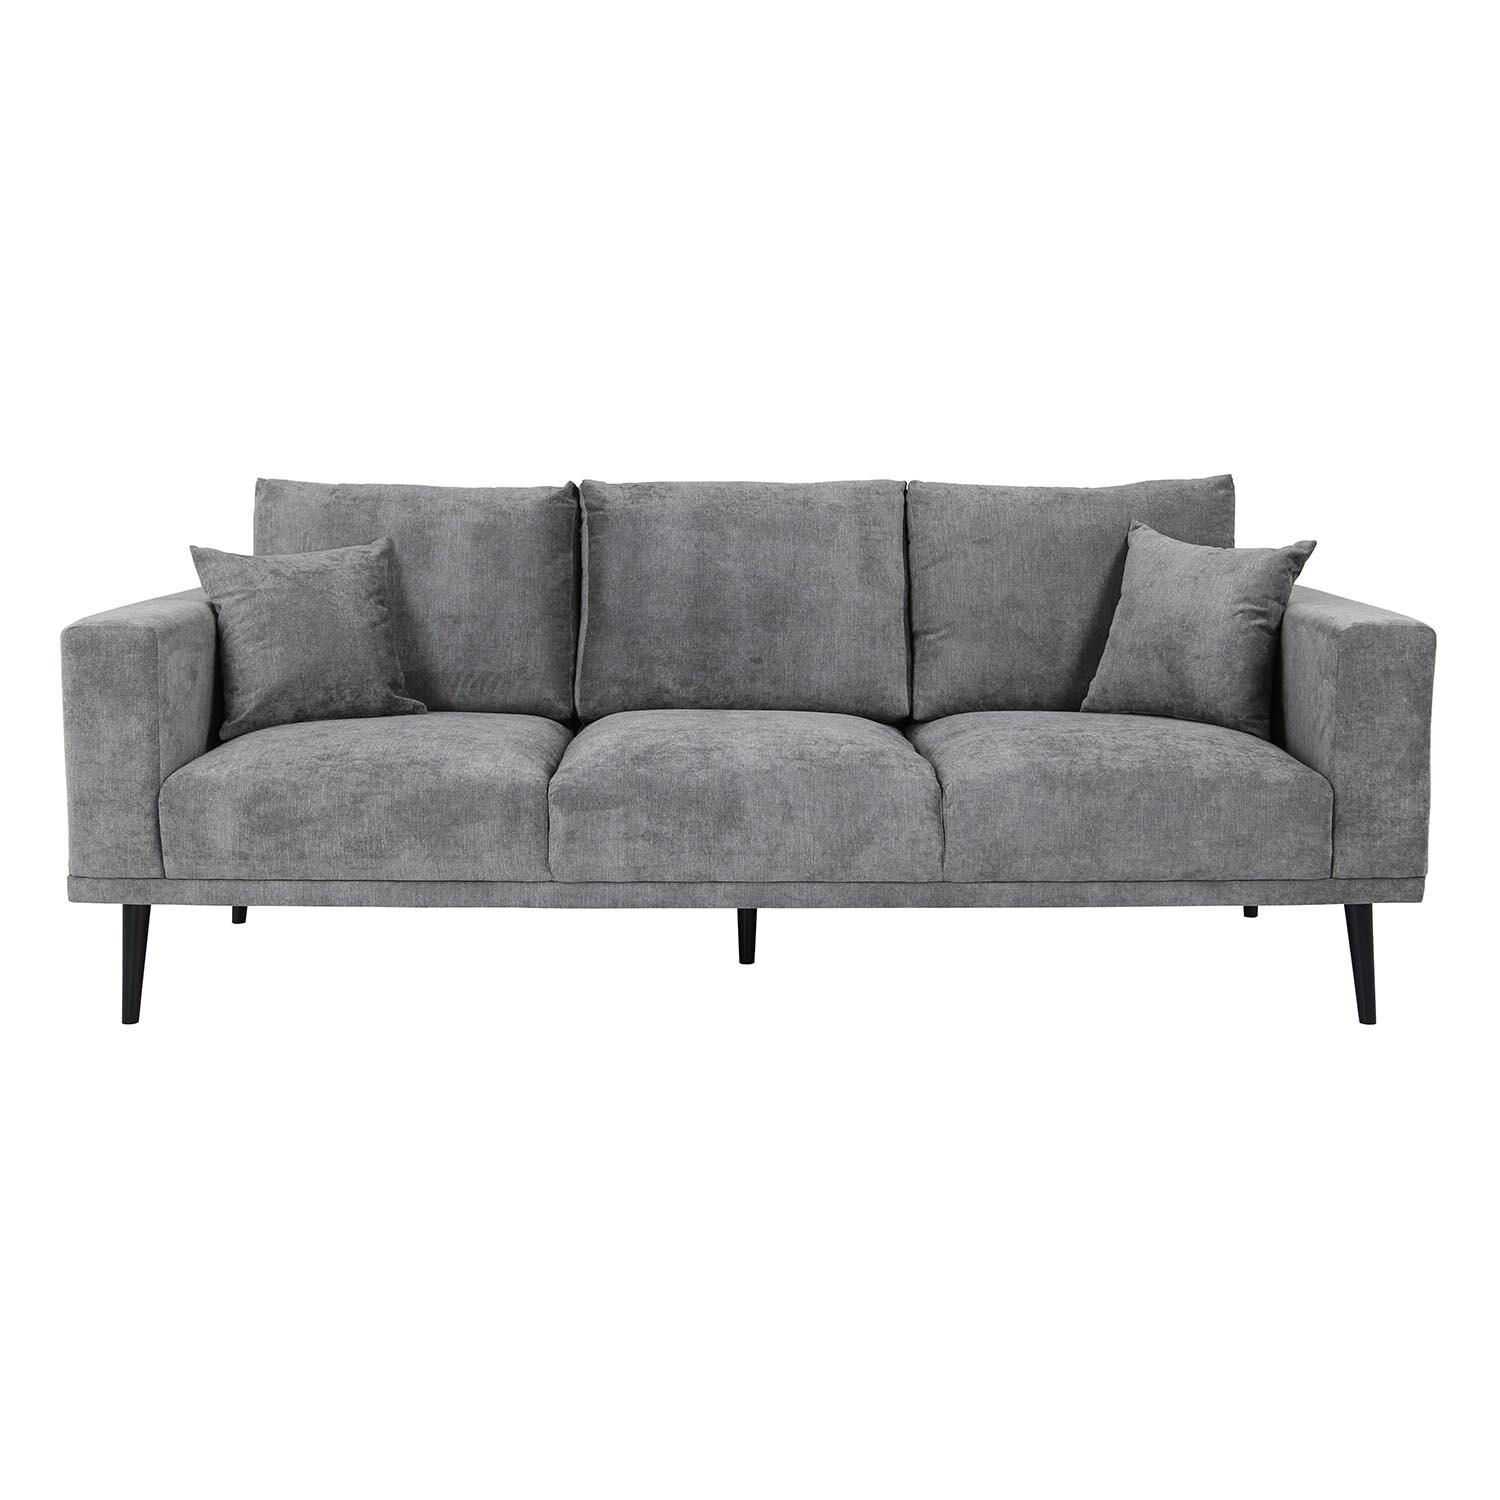 Connie 3 Seater Grey Fabric Sofa Image 2